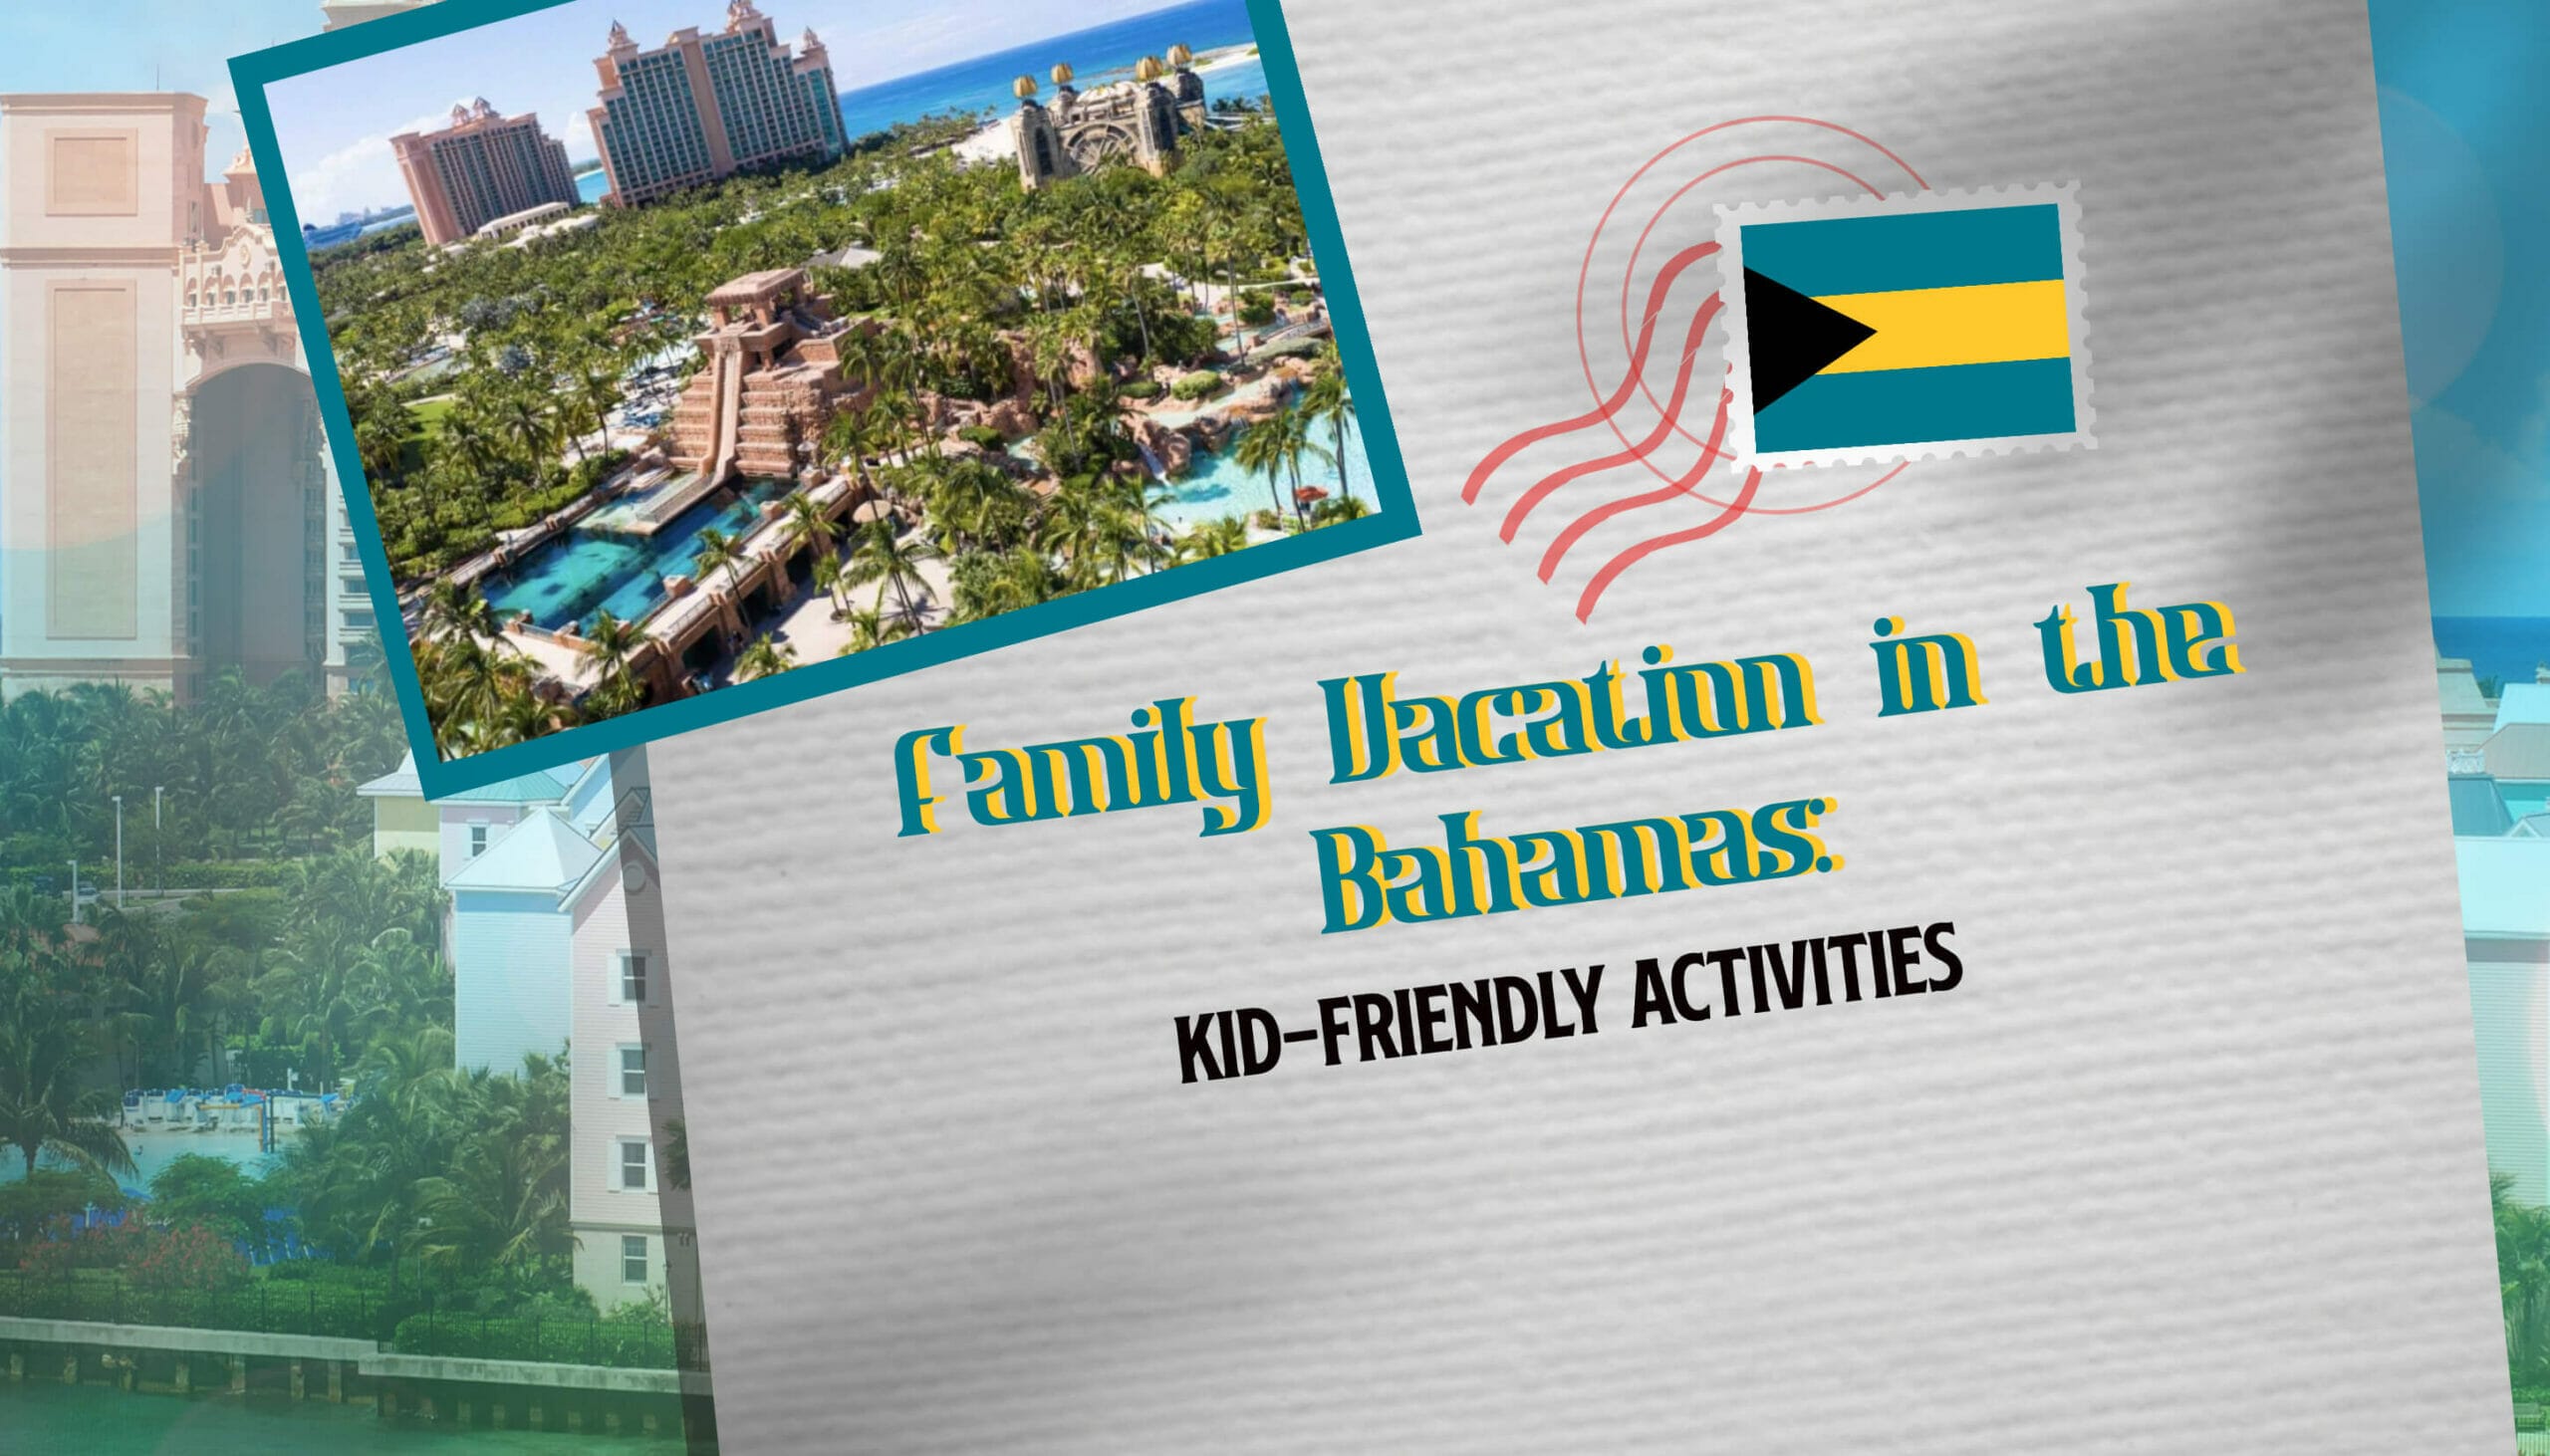 Family Vacation in the Bahamas Kid-Friendly Activities